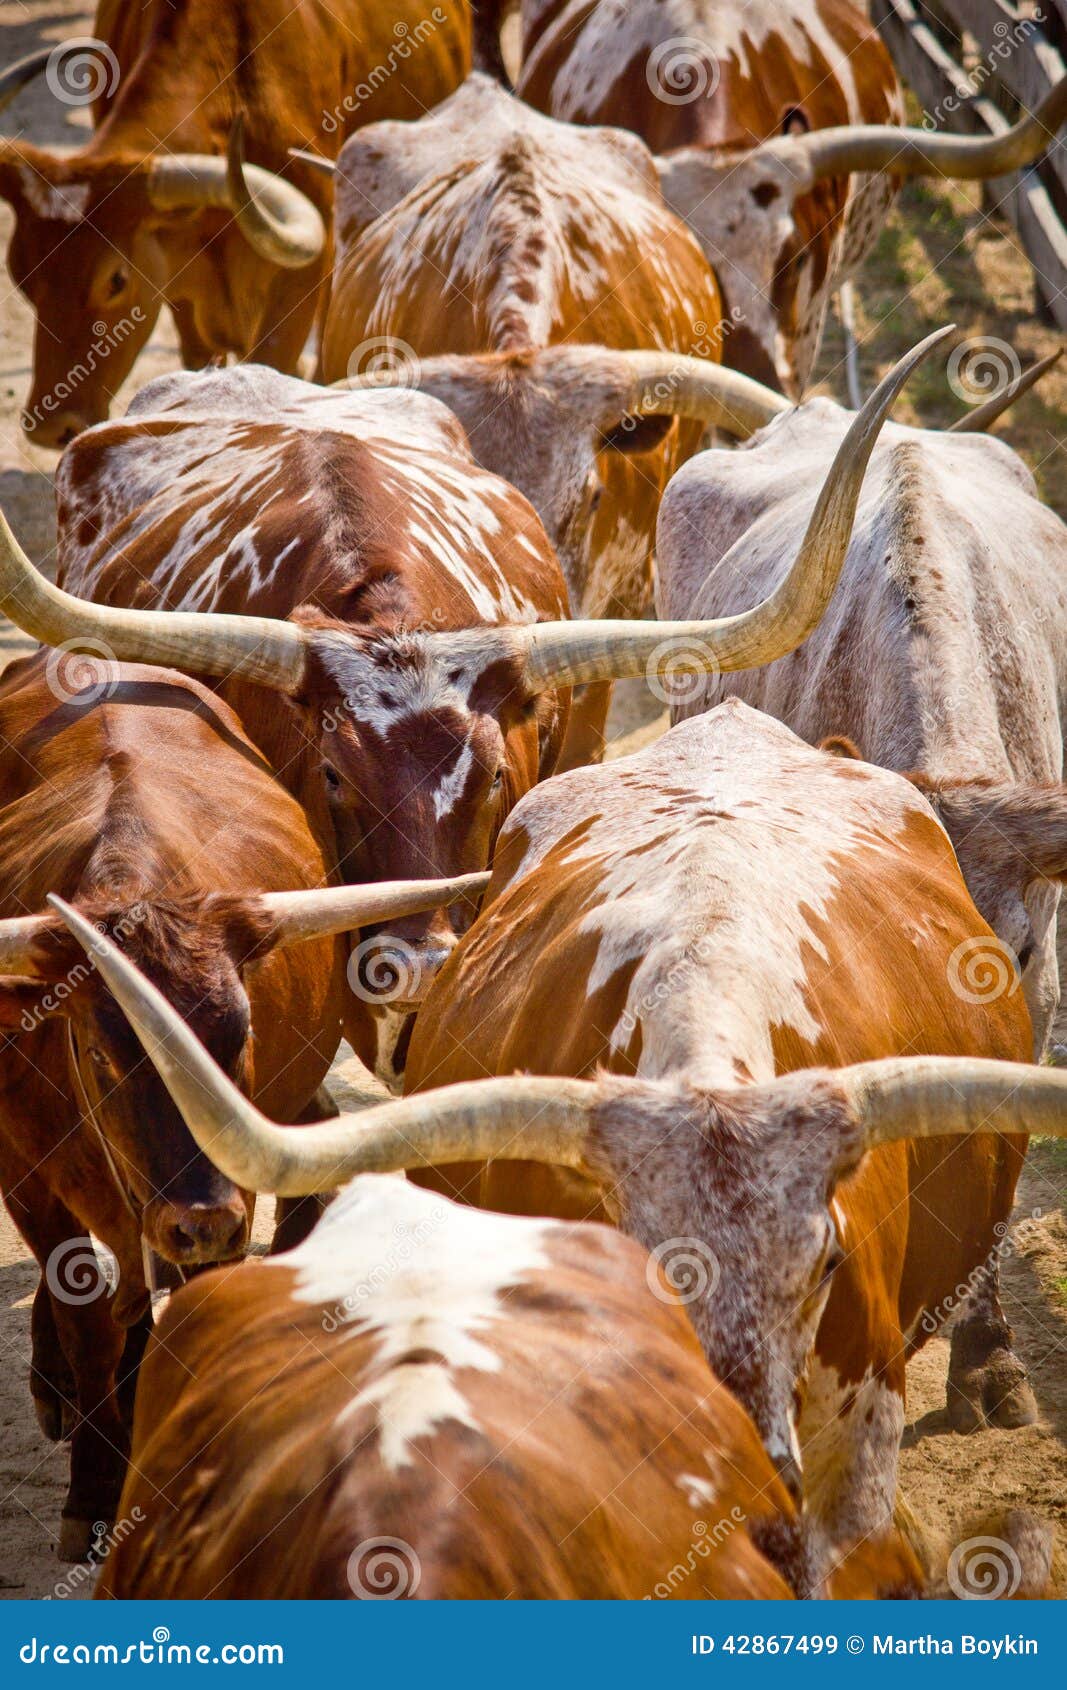 herding cattle texas longhorns cows